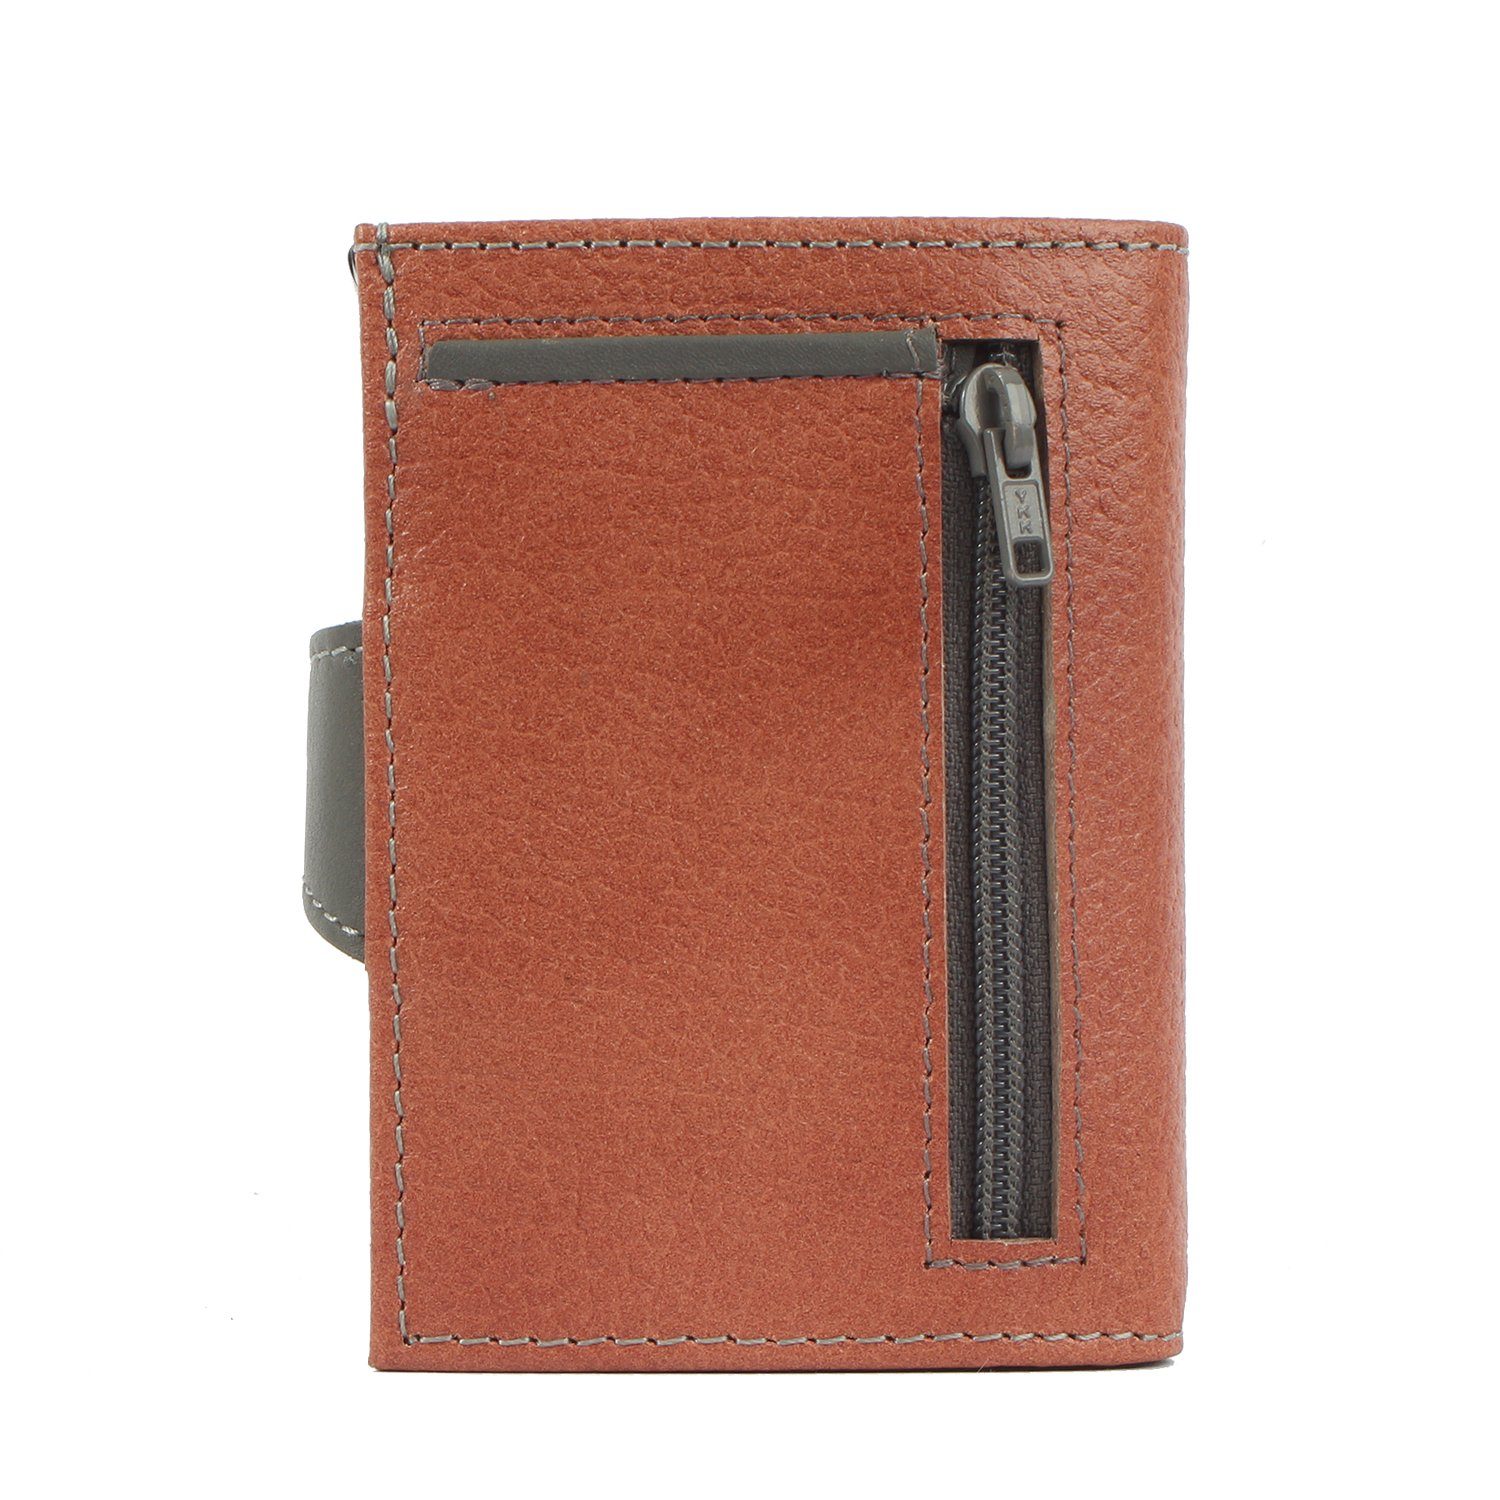 Margelisch Mini Geldbörse noonyu double RFID Kreditkartenbörse leather, Upcycling Leder salmon aus